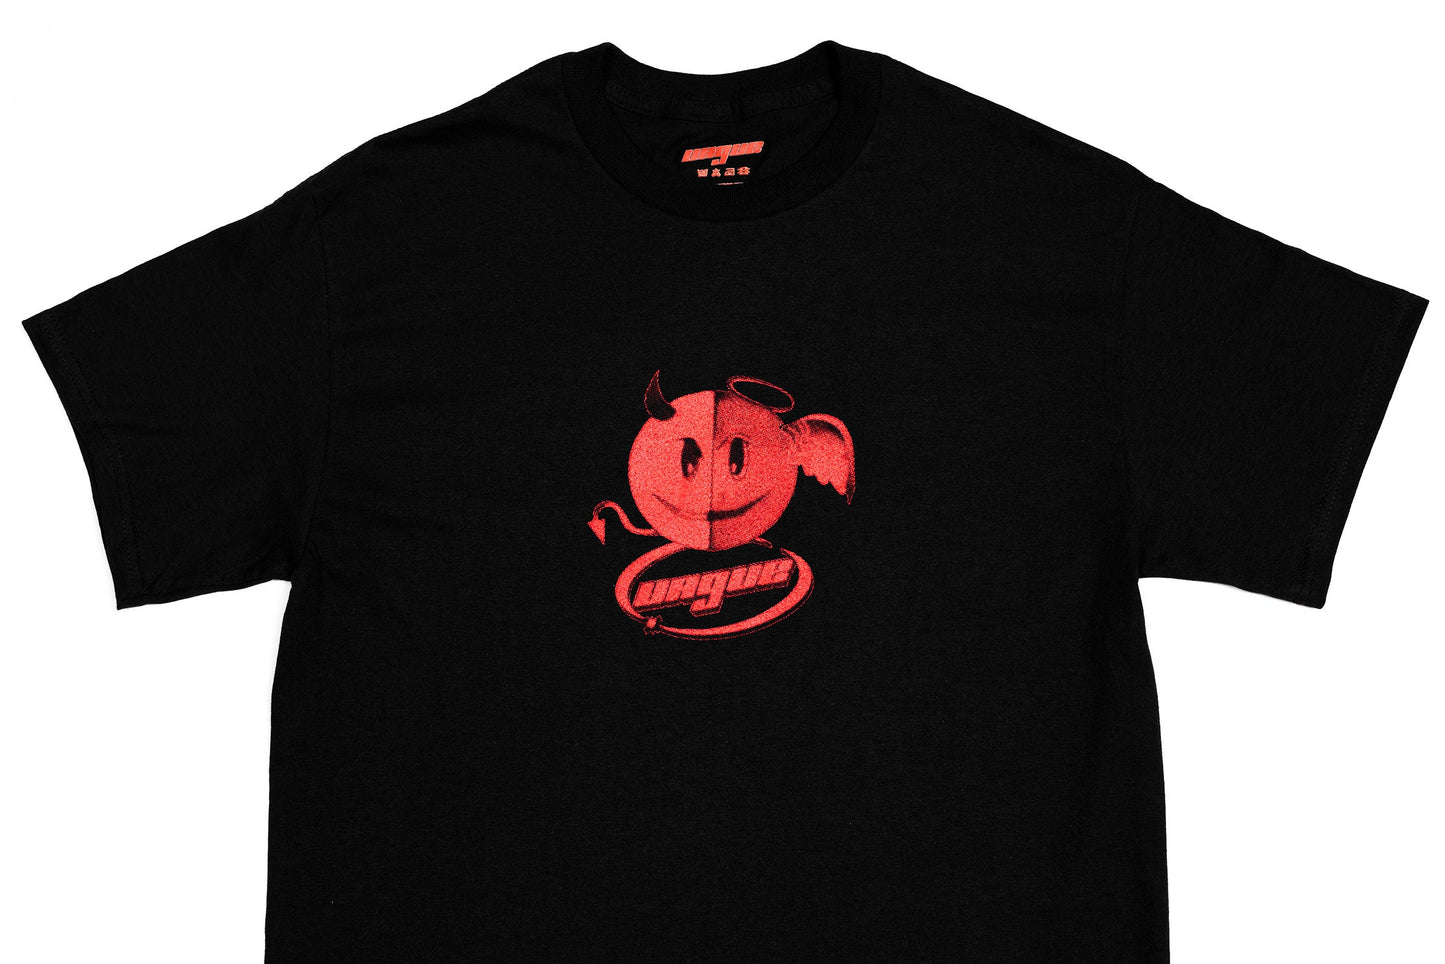 Vague - Cheeky Devil - Black T-Shirt